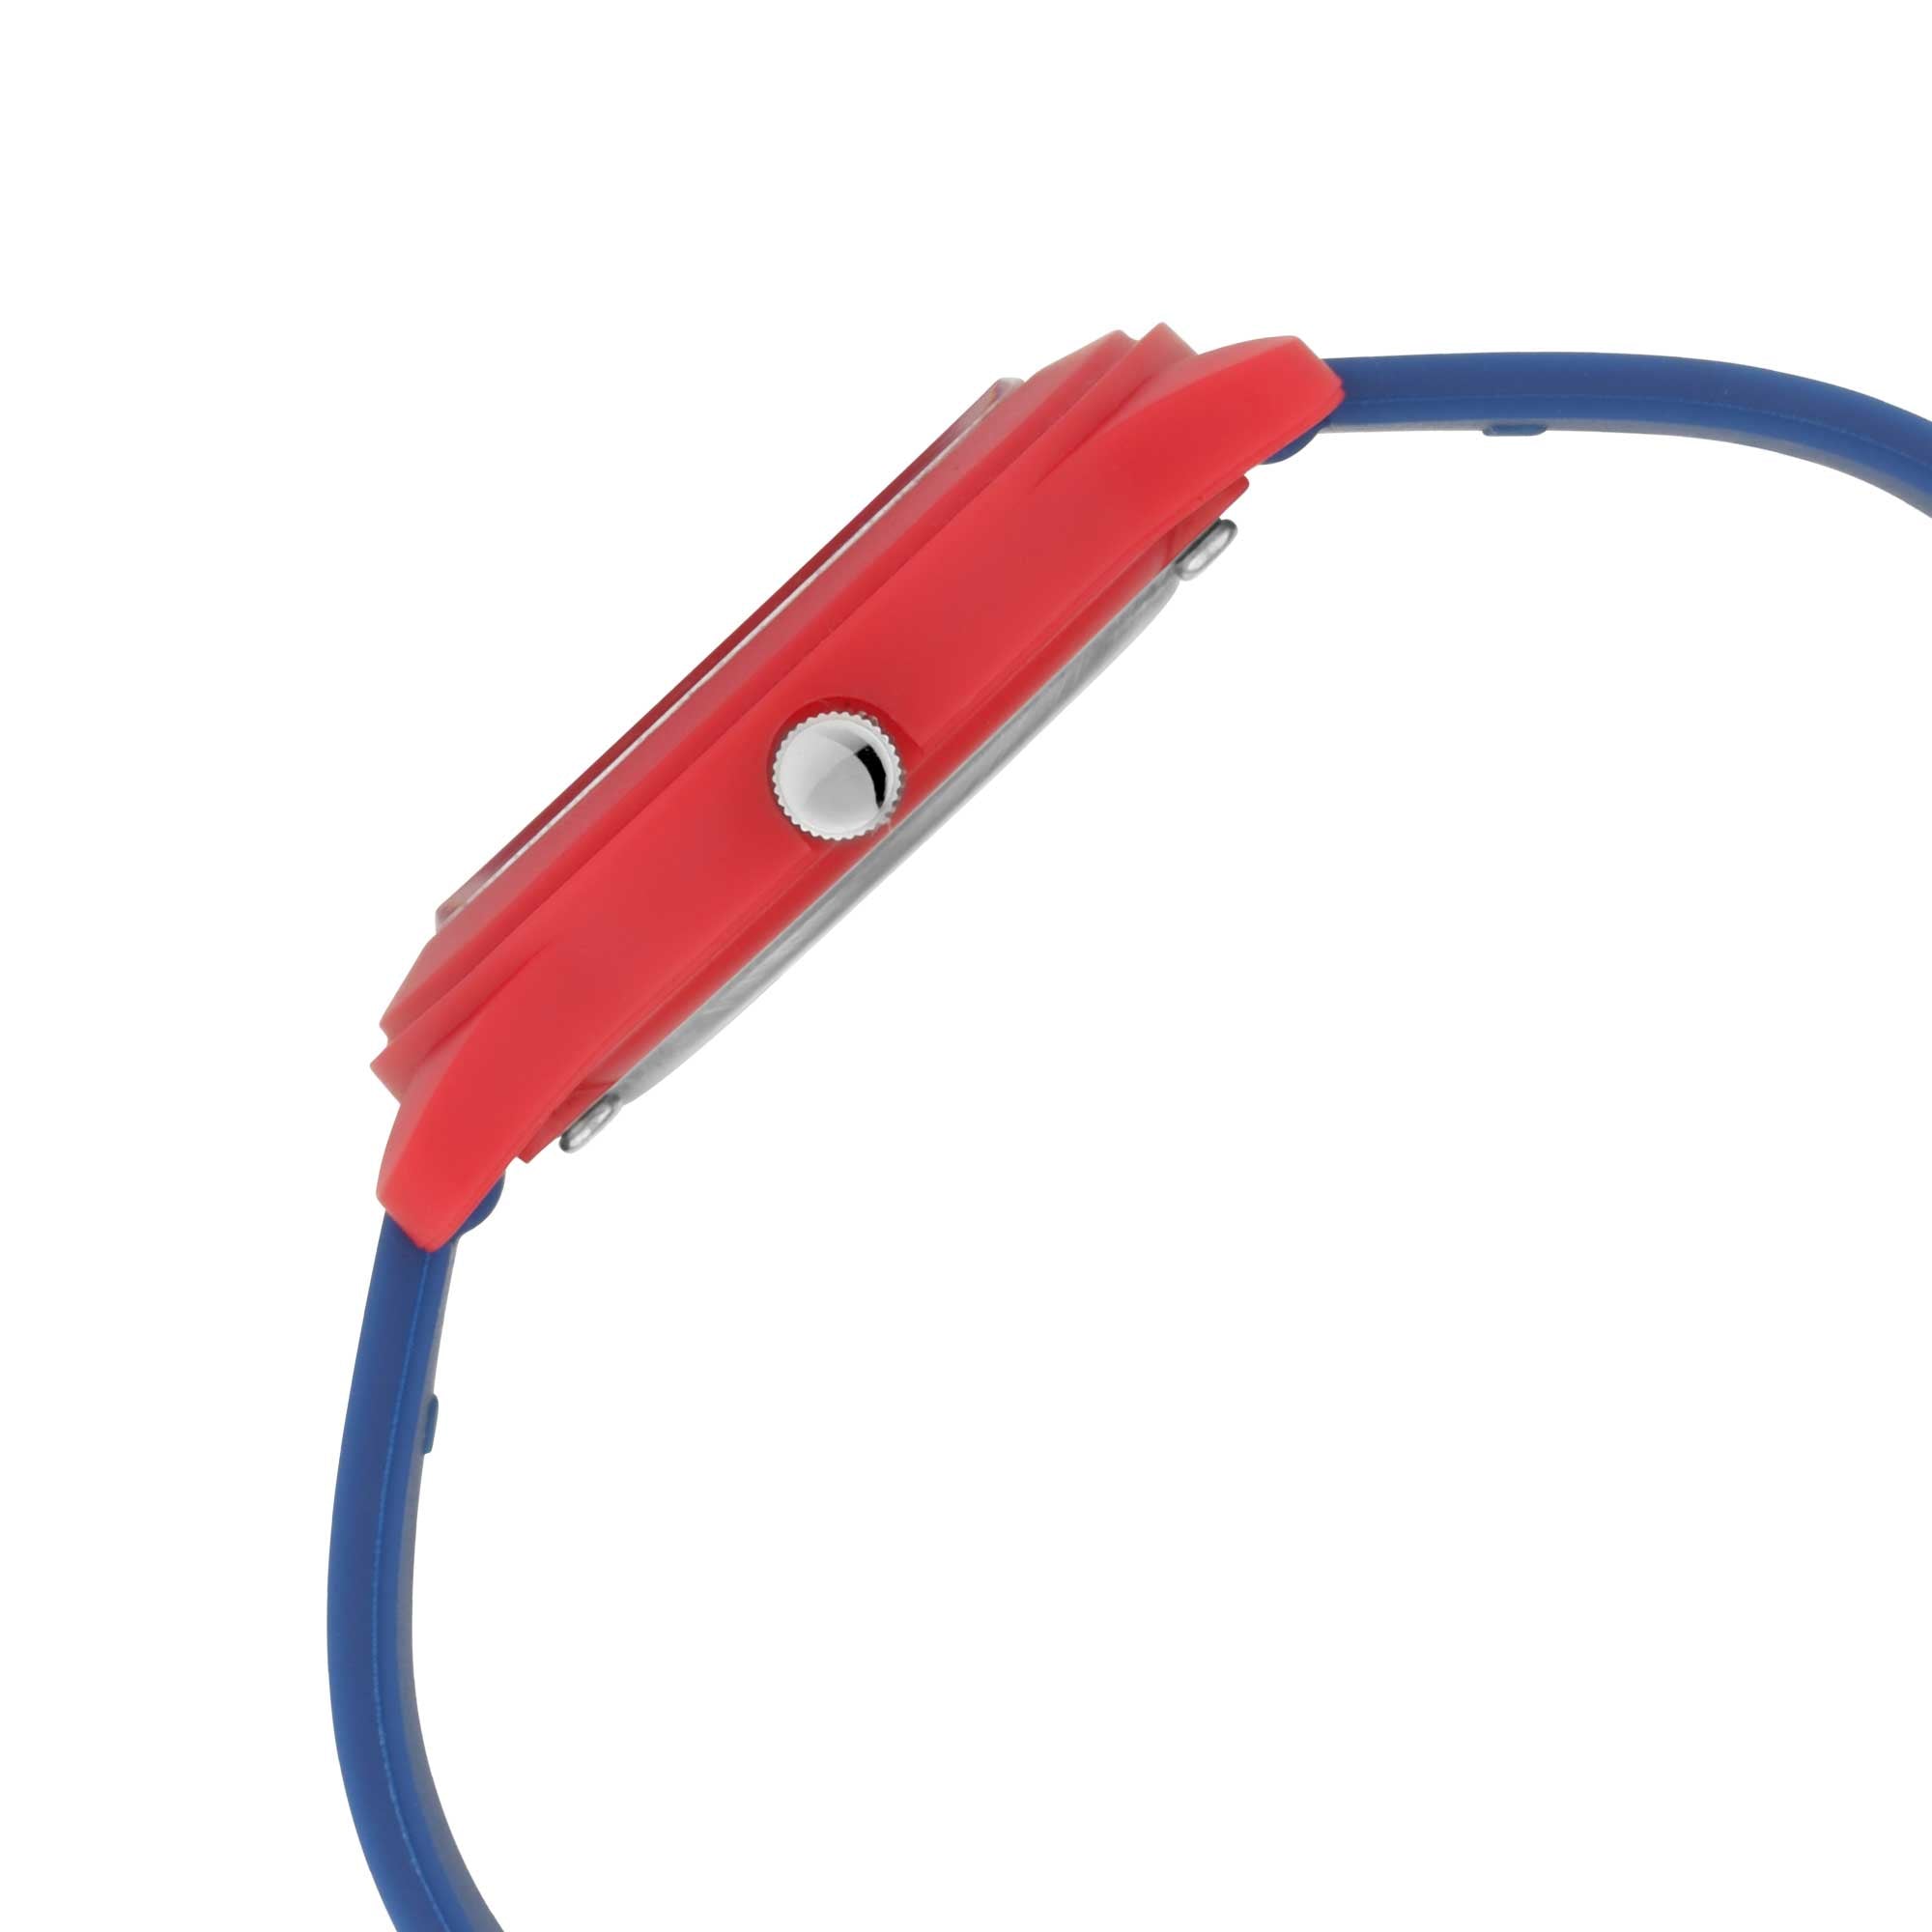 Zoop By Titan Quartz Analog Blue Dial PU Strap Watch for Kids